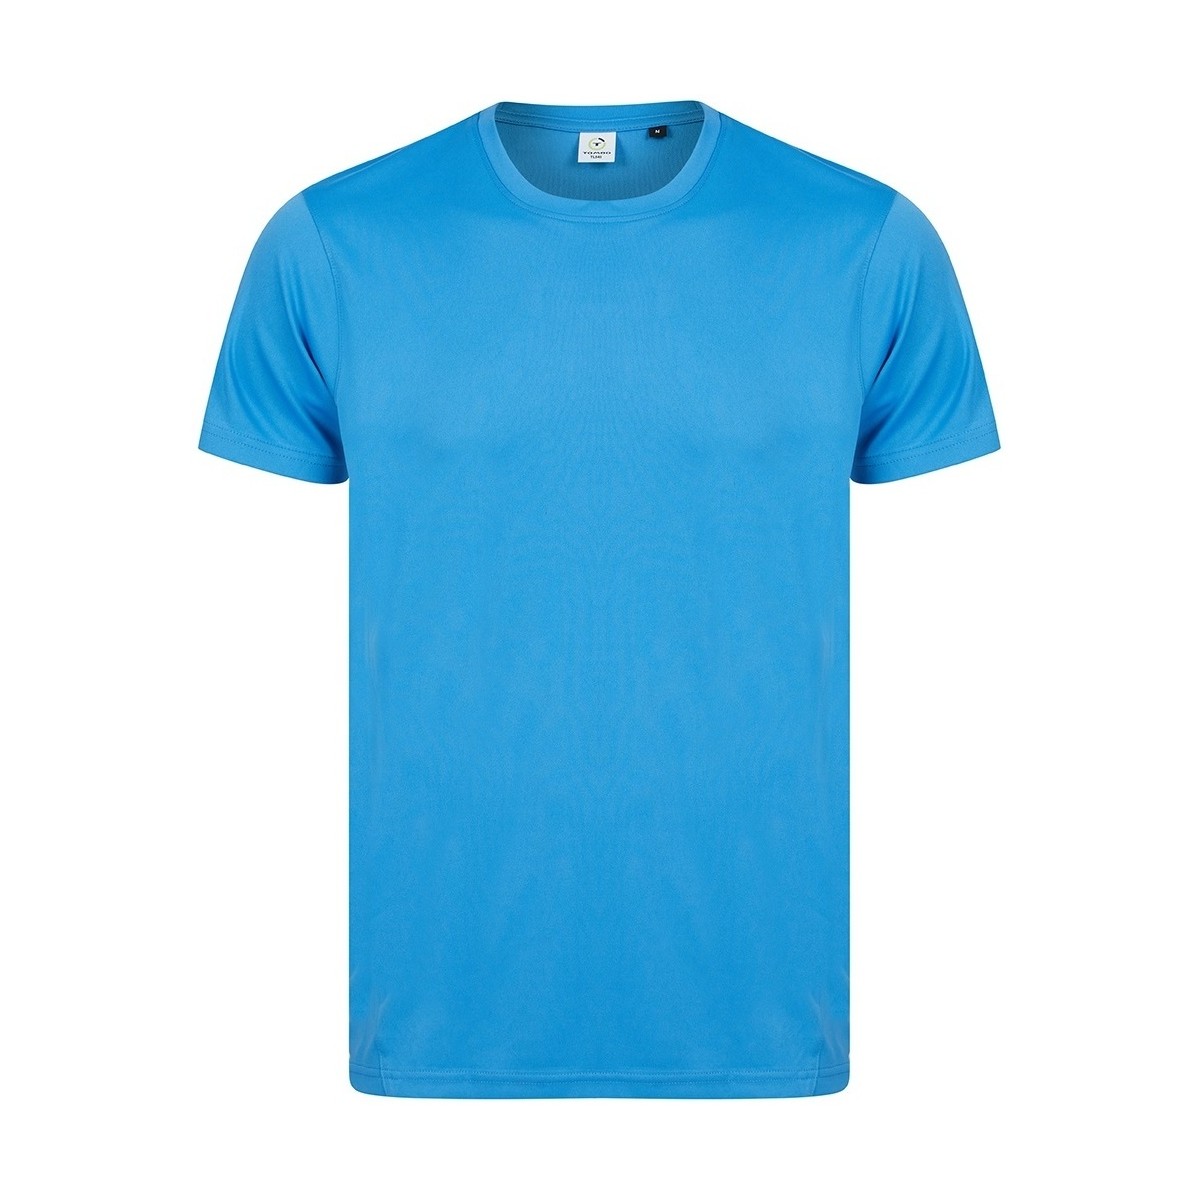 textil Camisetas manga larga Tombo Performance Azul